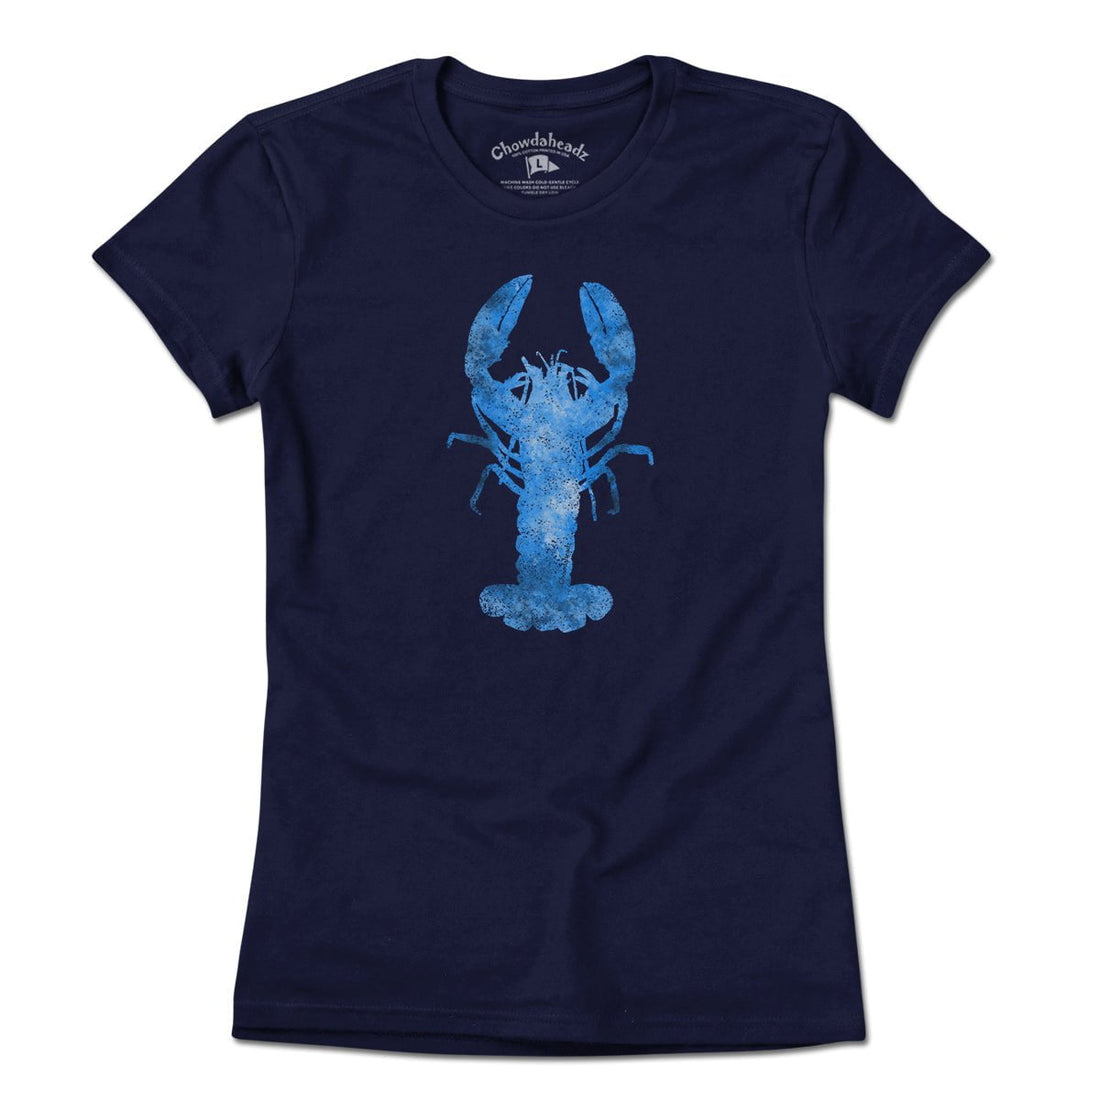 Blue Lobster Watercolor T-Shirt - Chowdaheadz